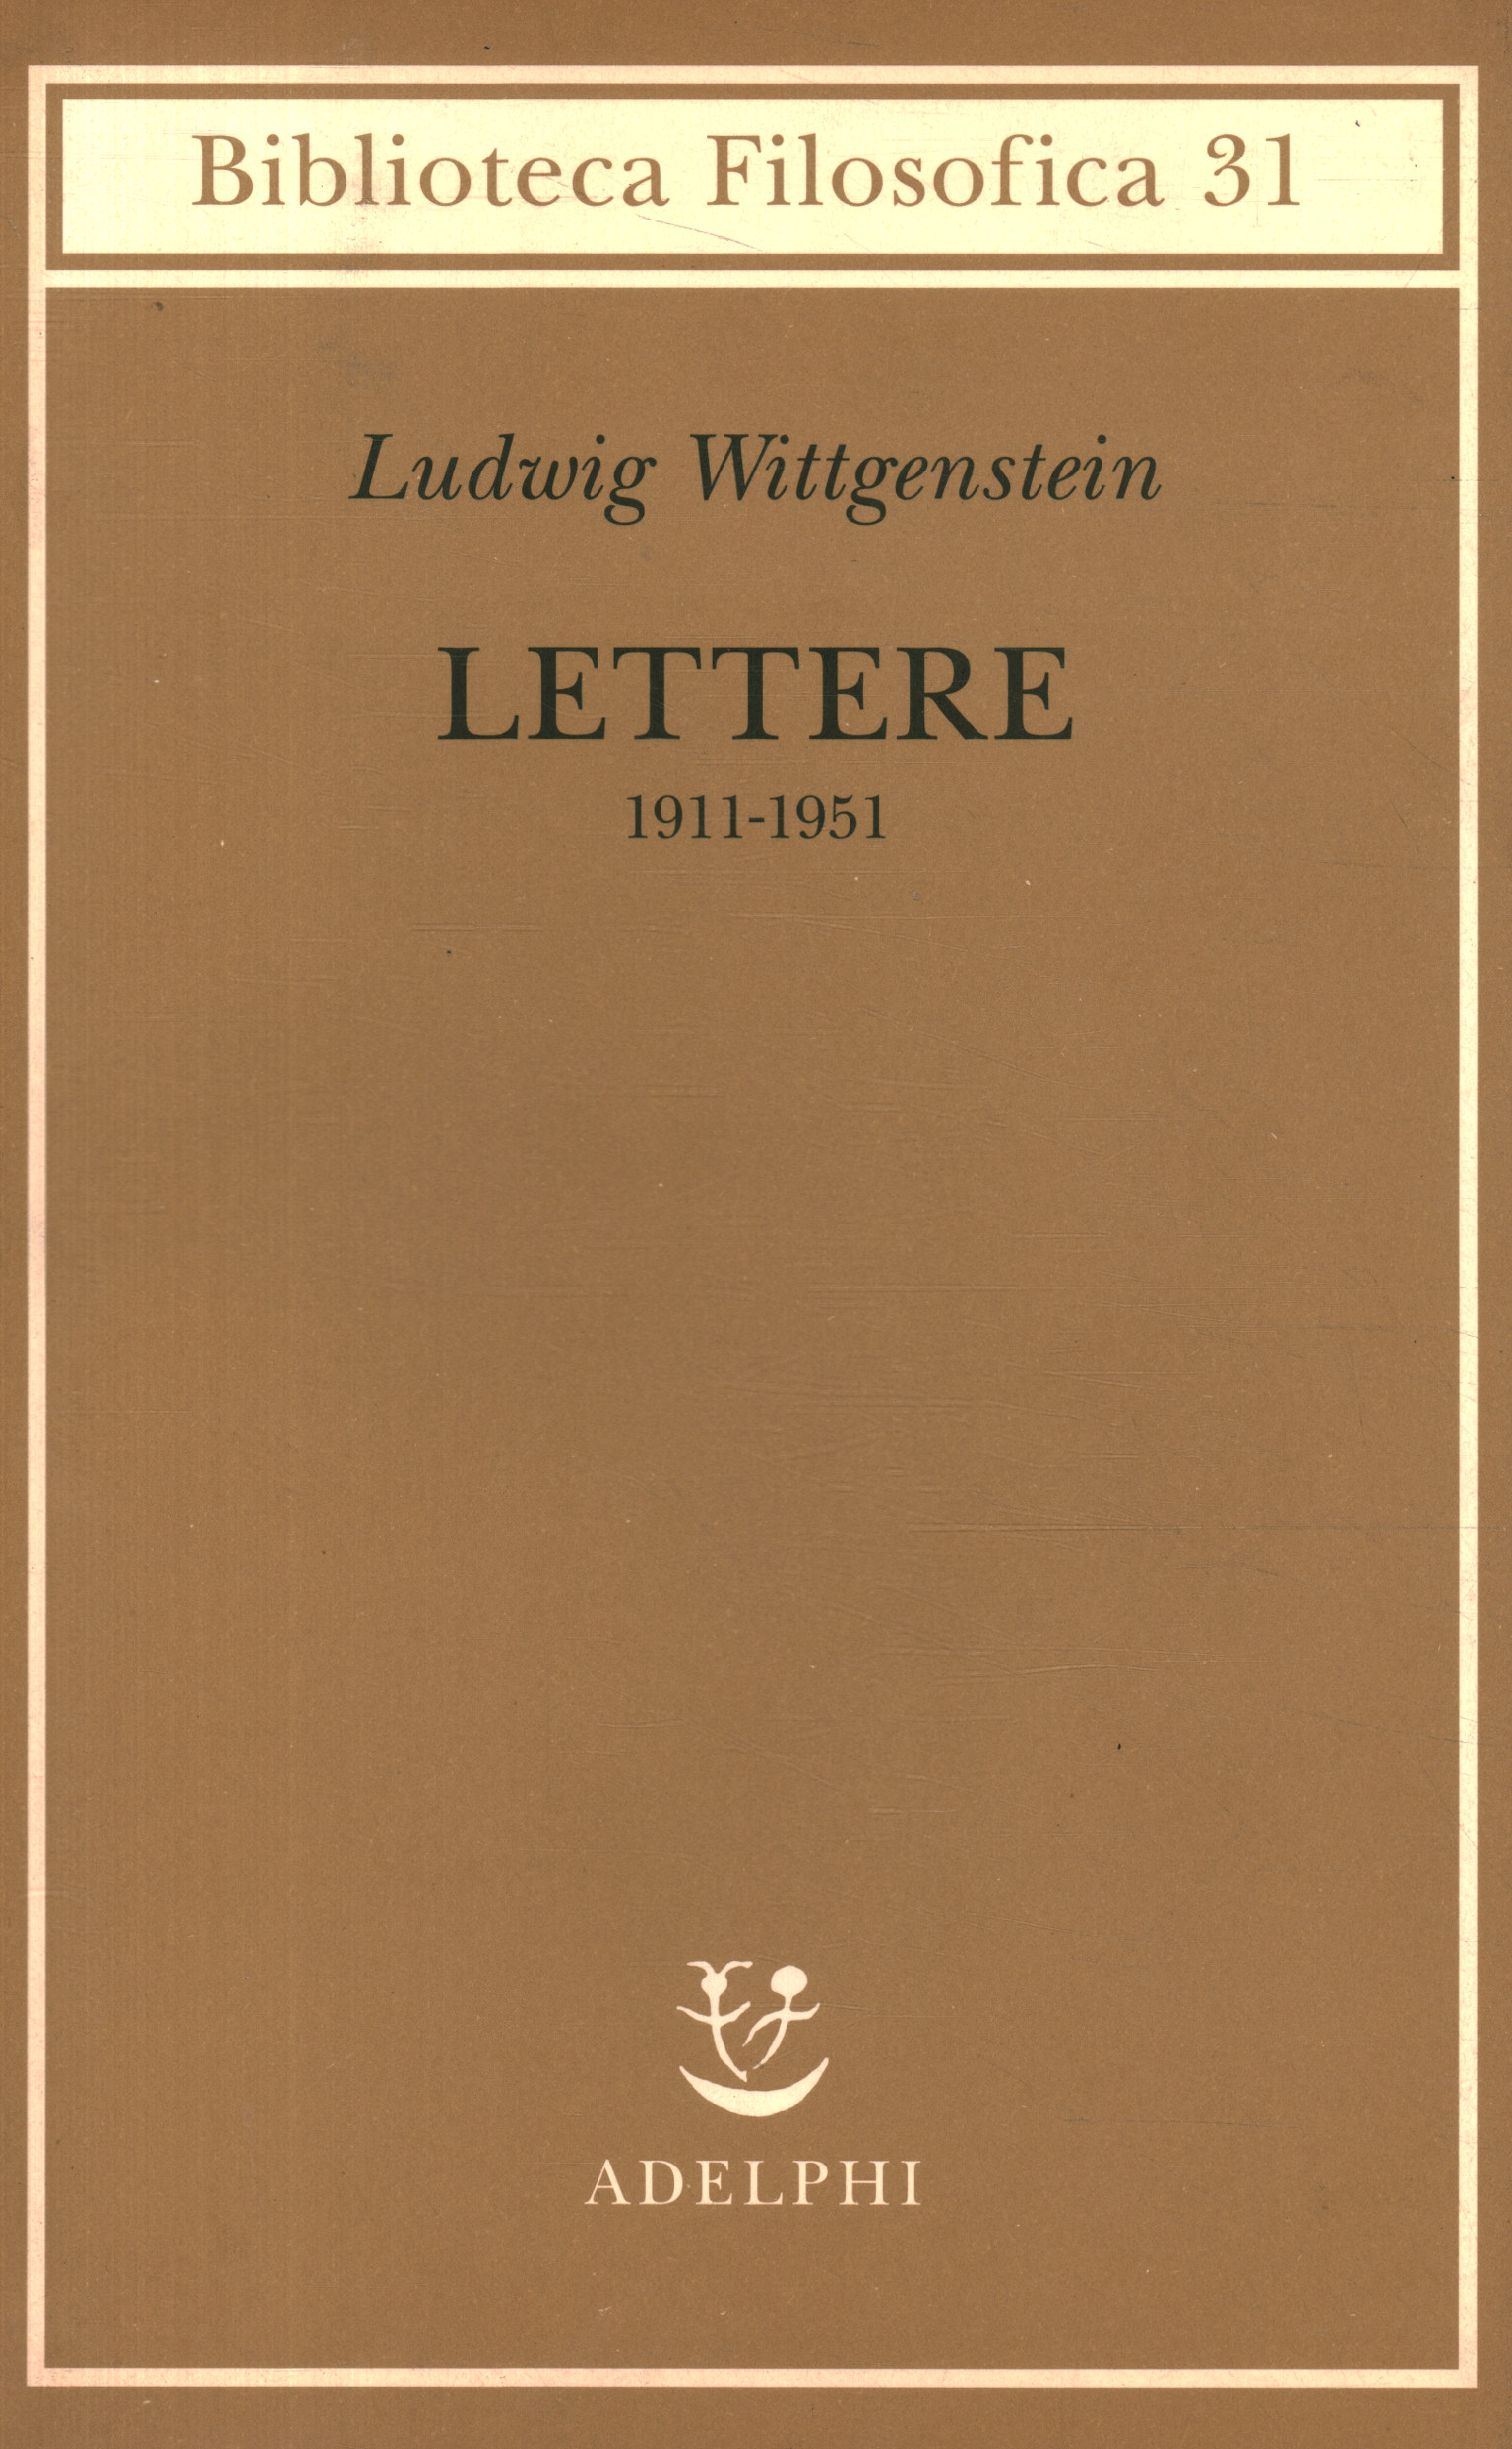 Cartas 1911-1951